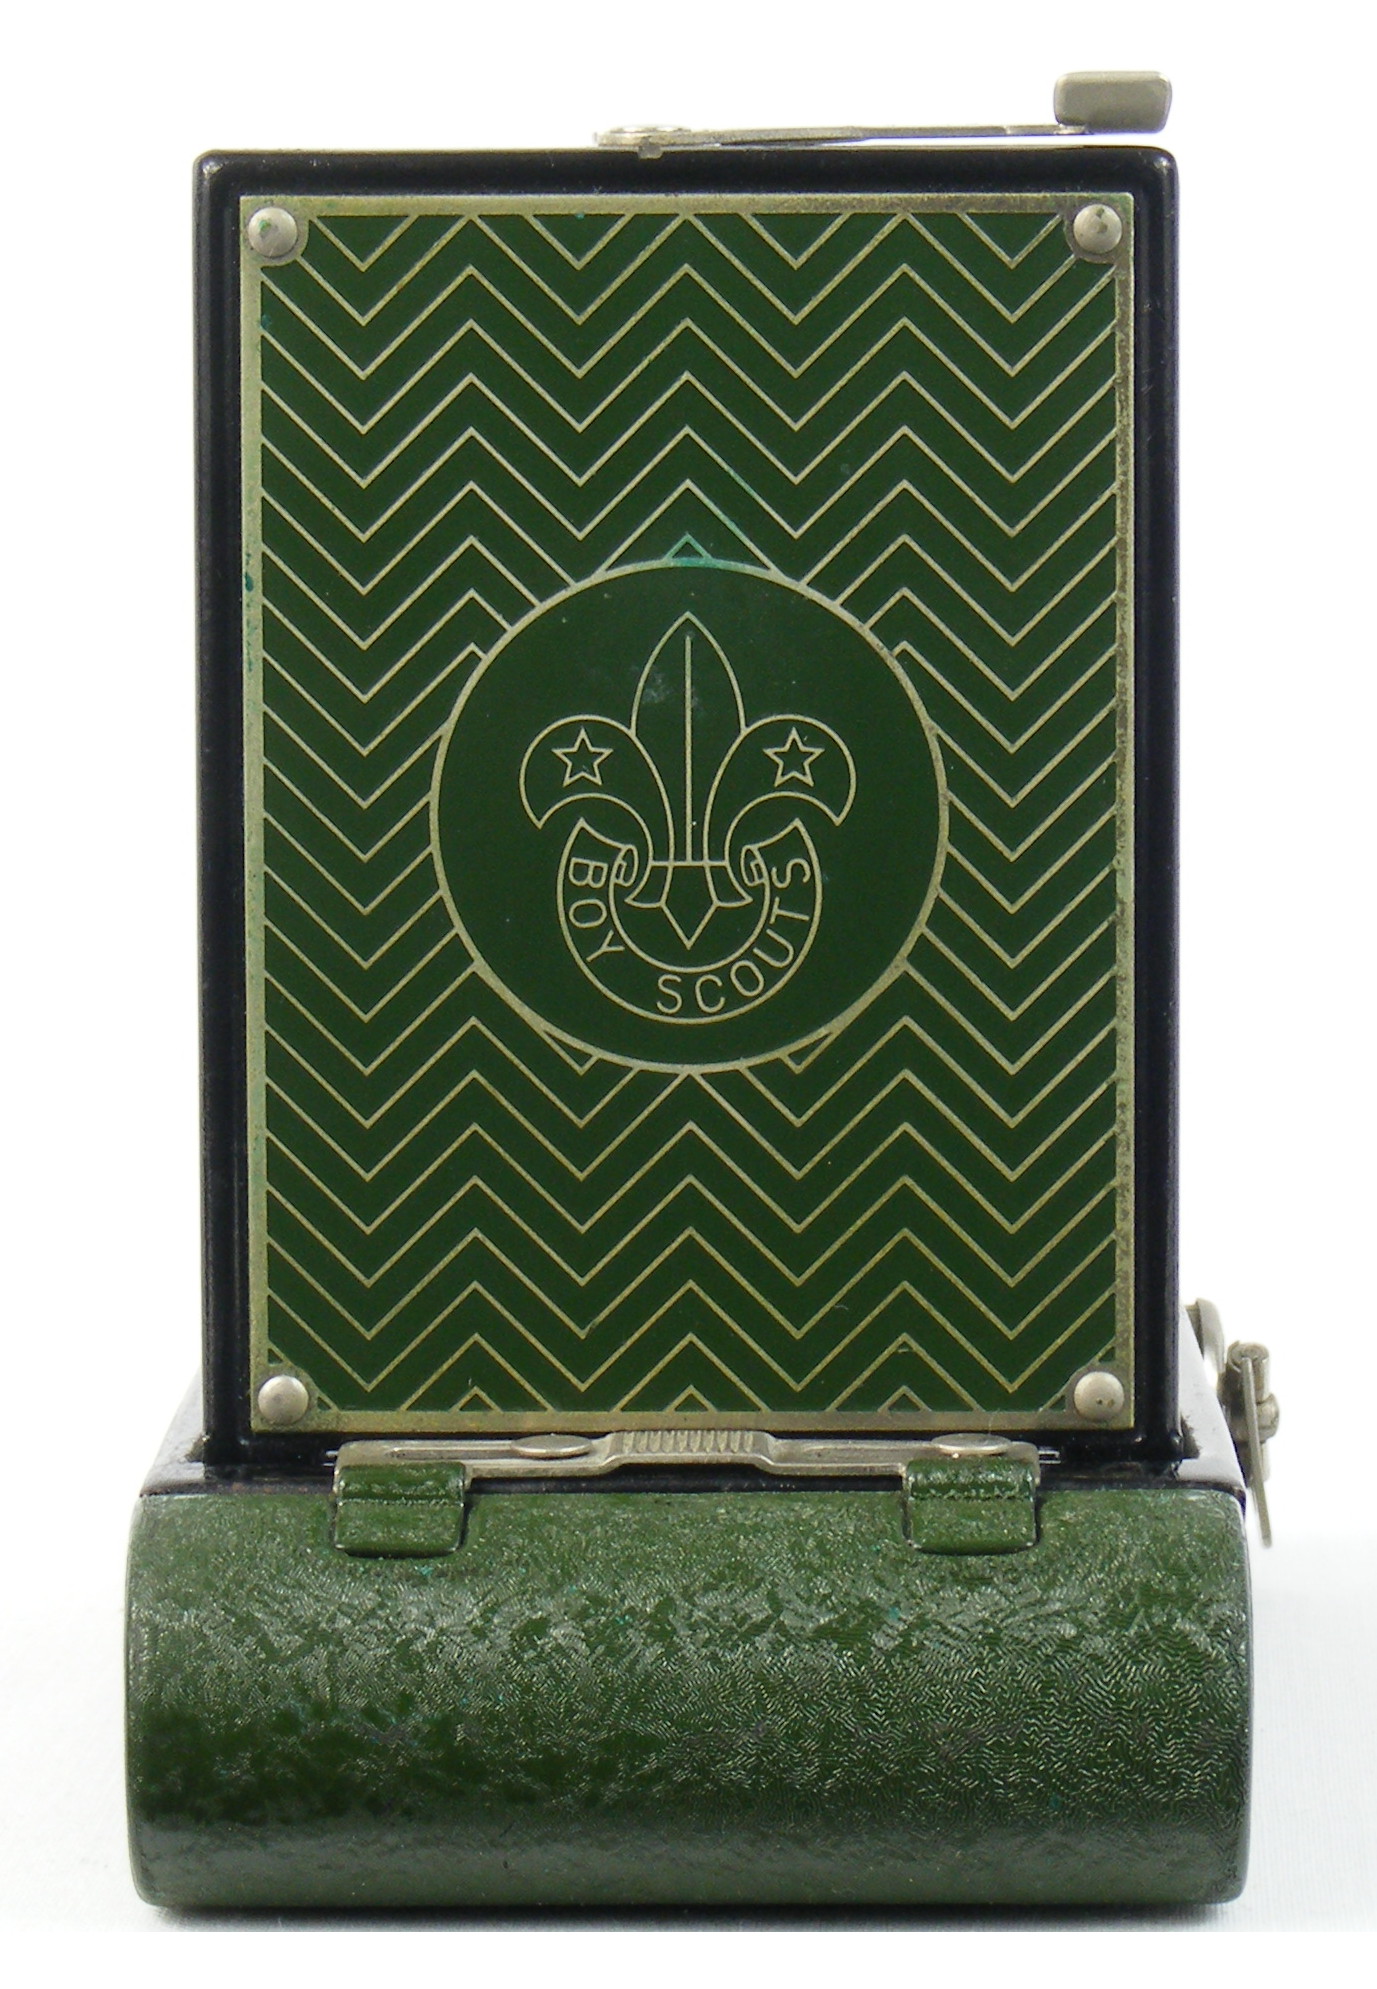 Image of Boy Scout emblem on baseplate